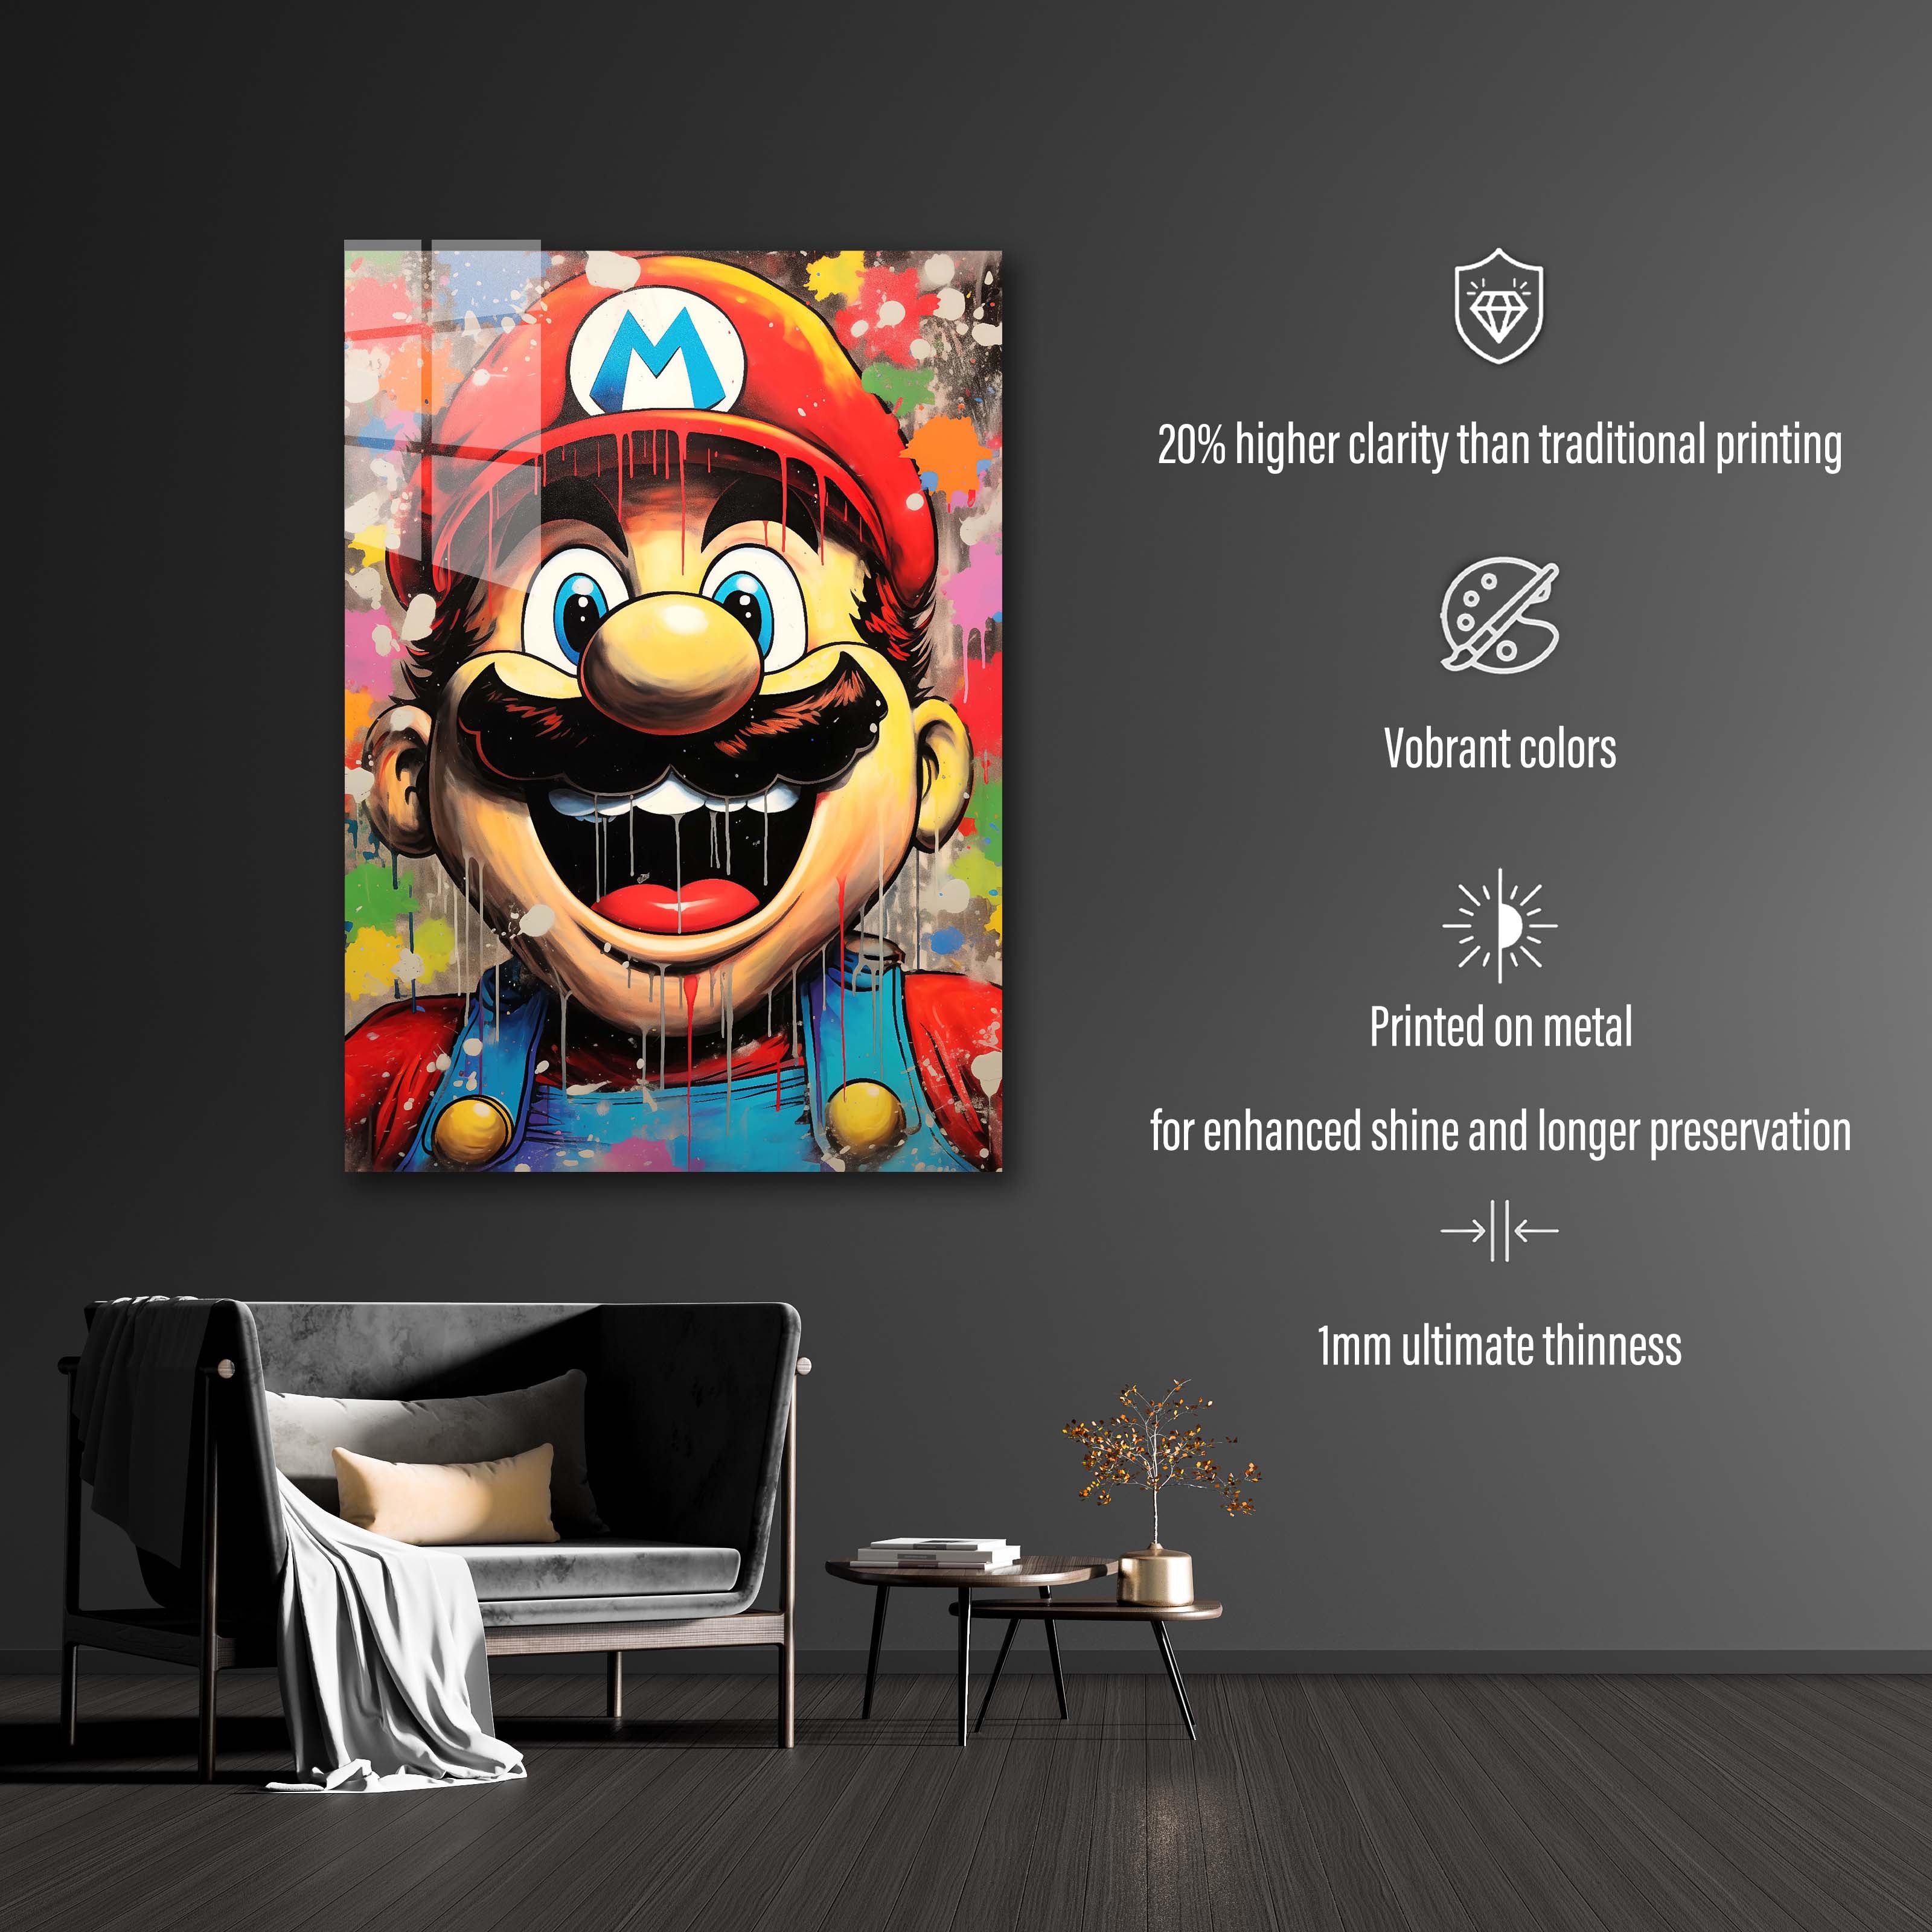 Super Mario-designed by @Fluency Room